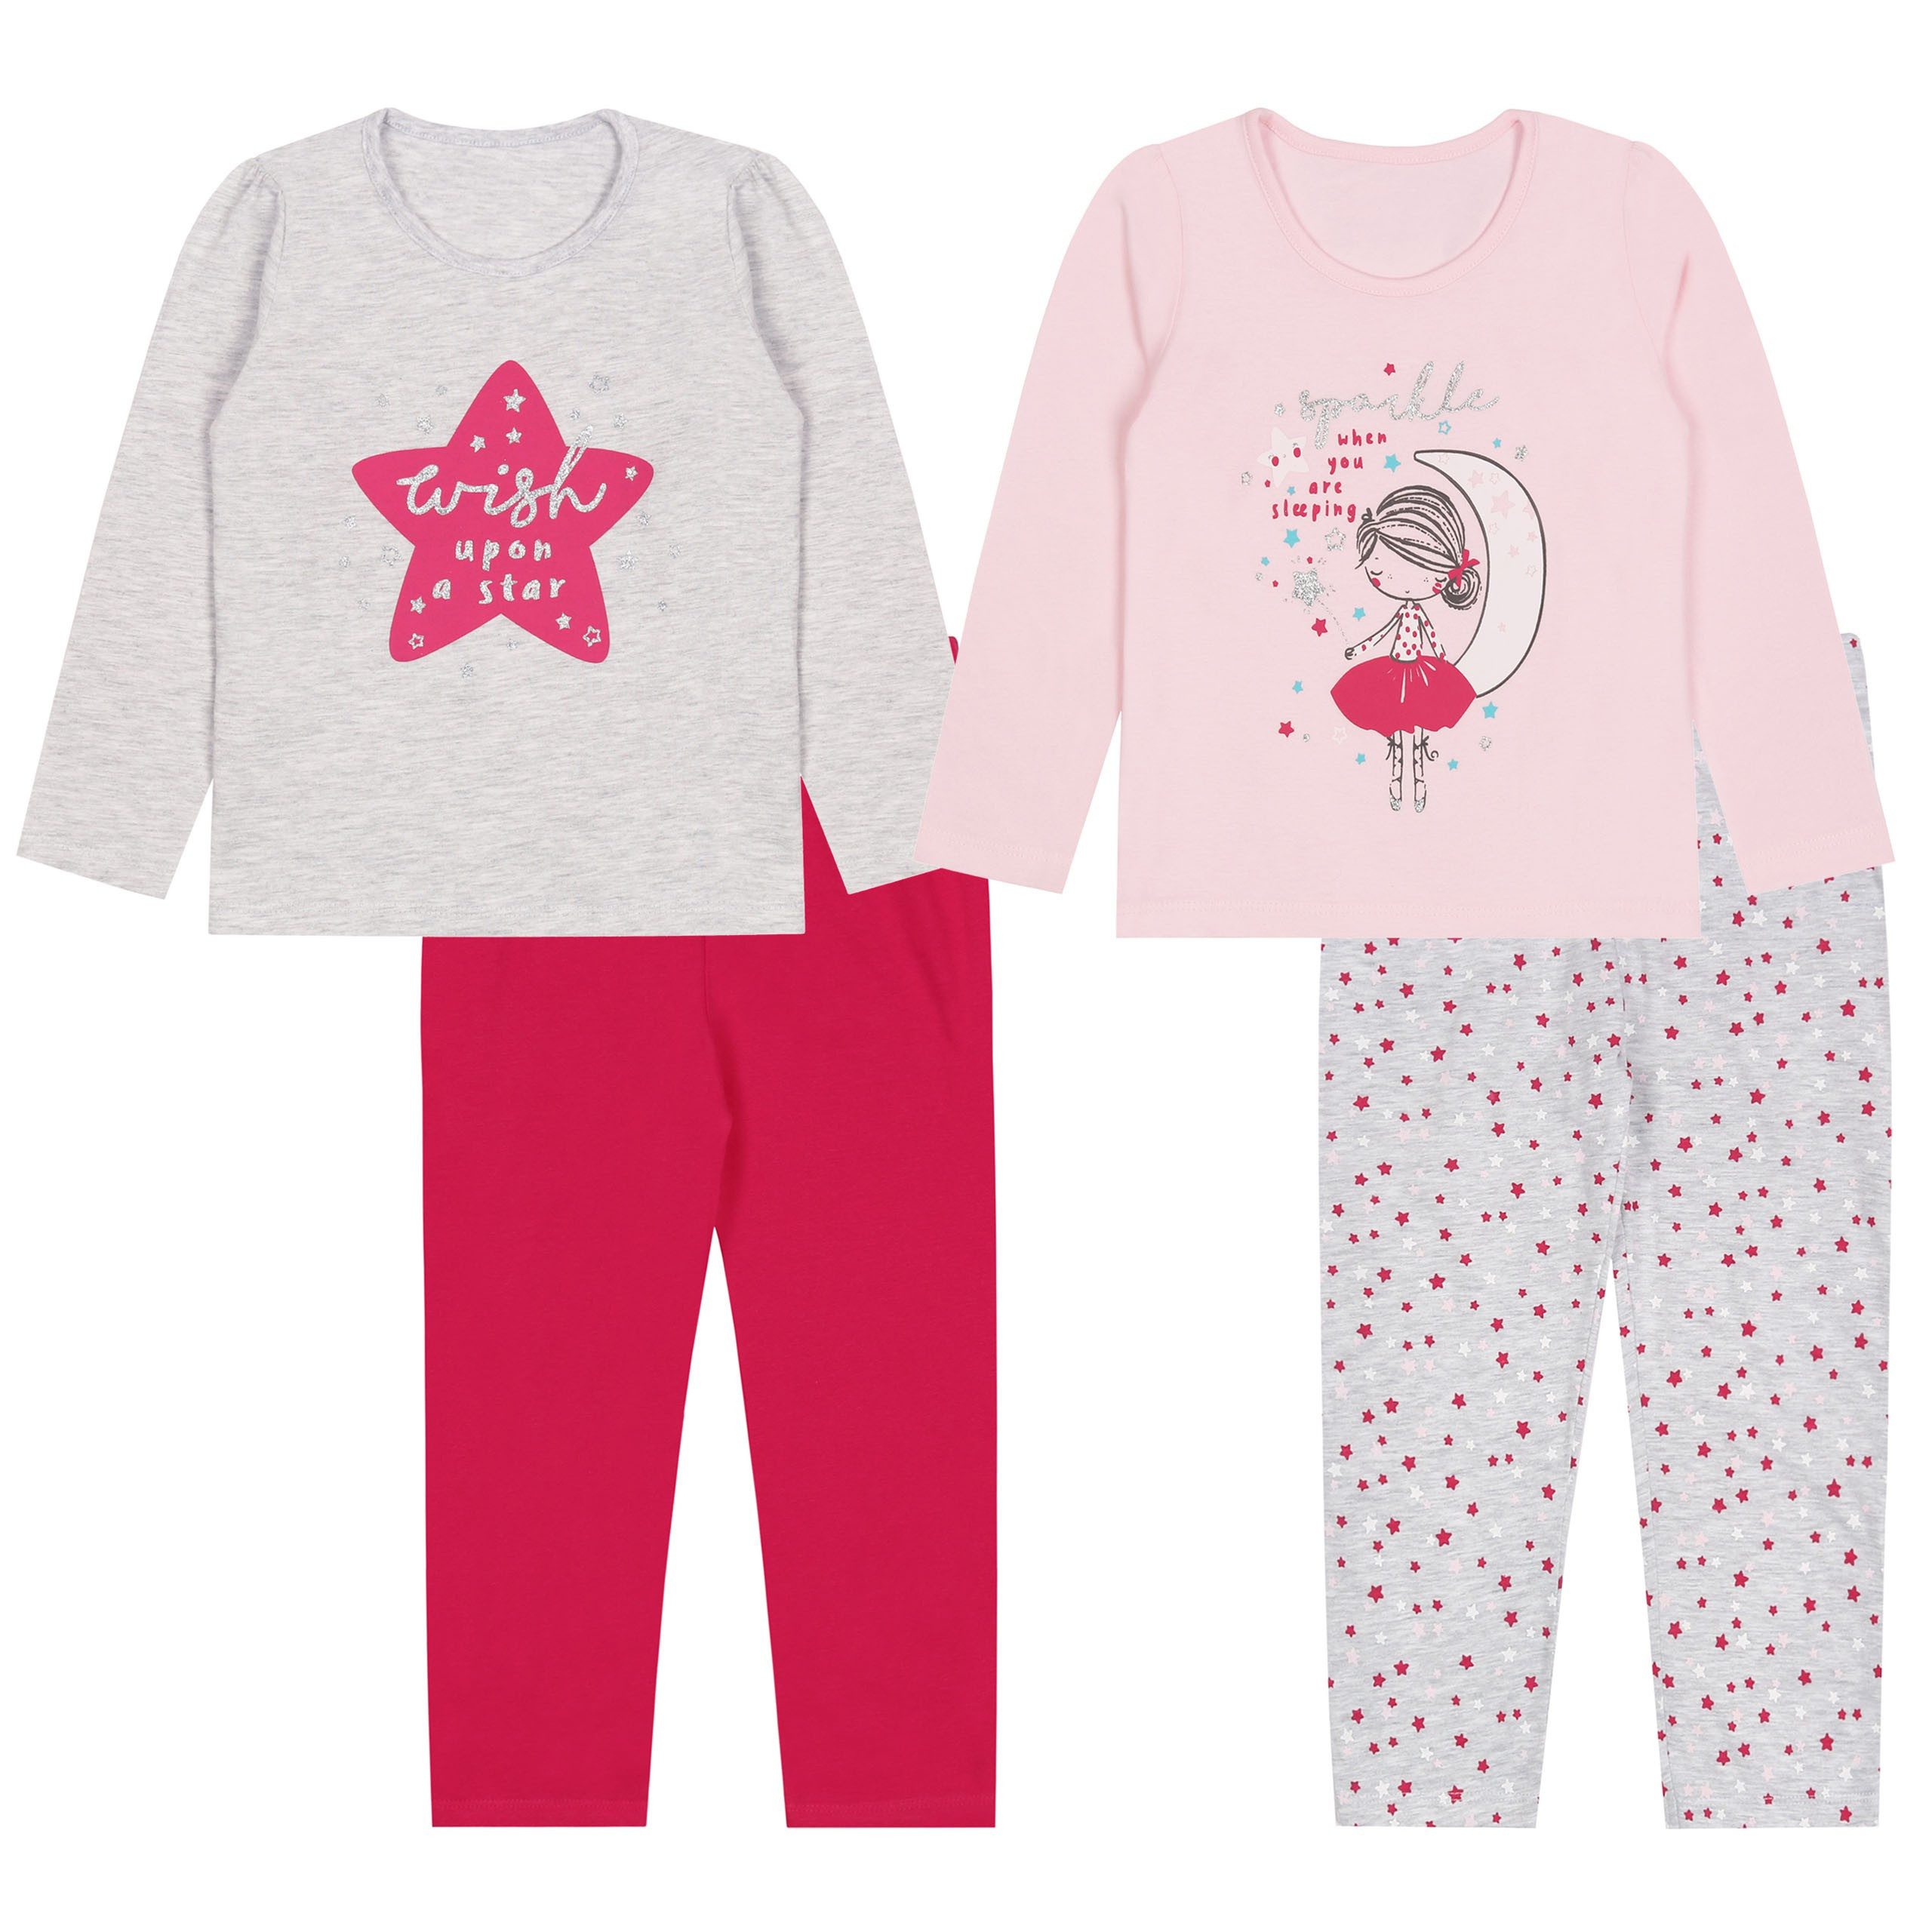 Sarcia.eu Pyjama Pyjama/Schlafanzug mit Sternen-Print, grau-pink - 2er Set 3-4 Jahre